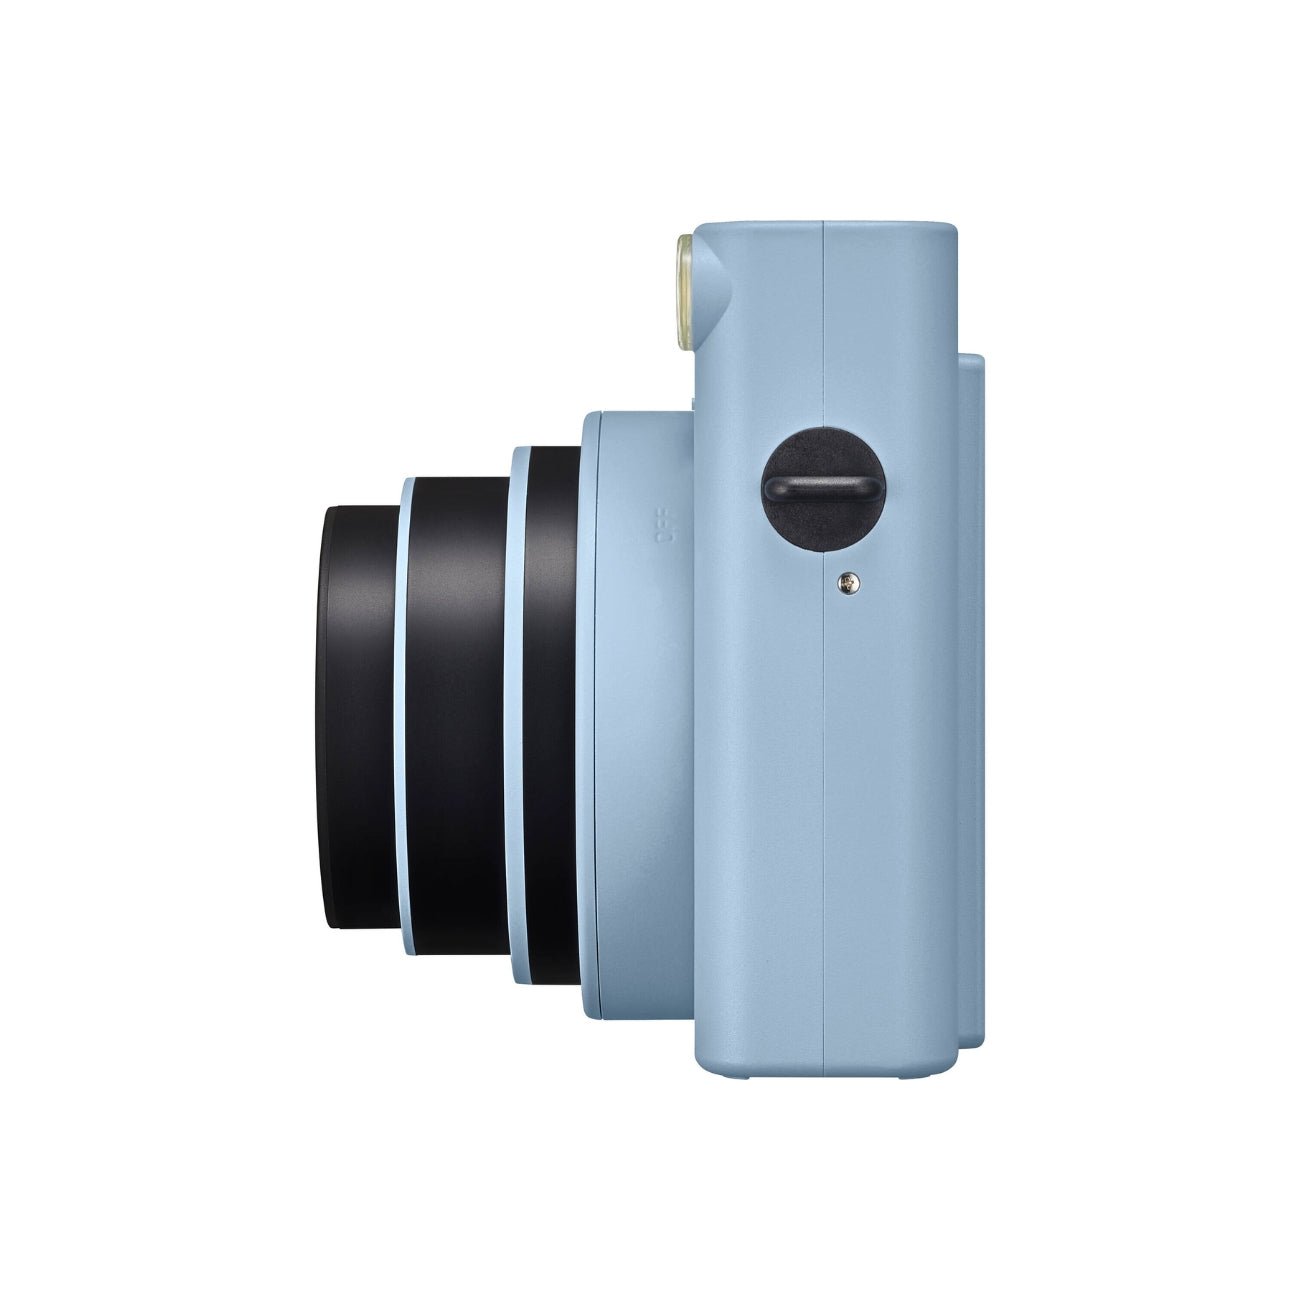 Fujifilm Instax SQUARE SQ1 Instant Film Camera